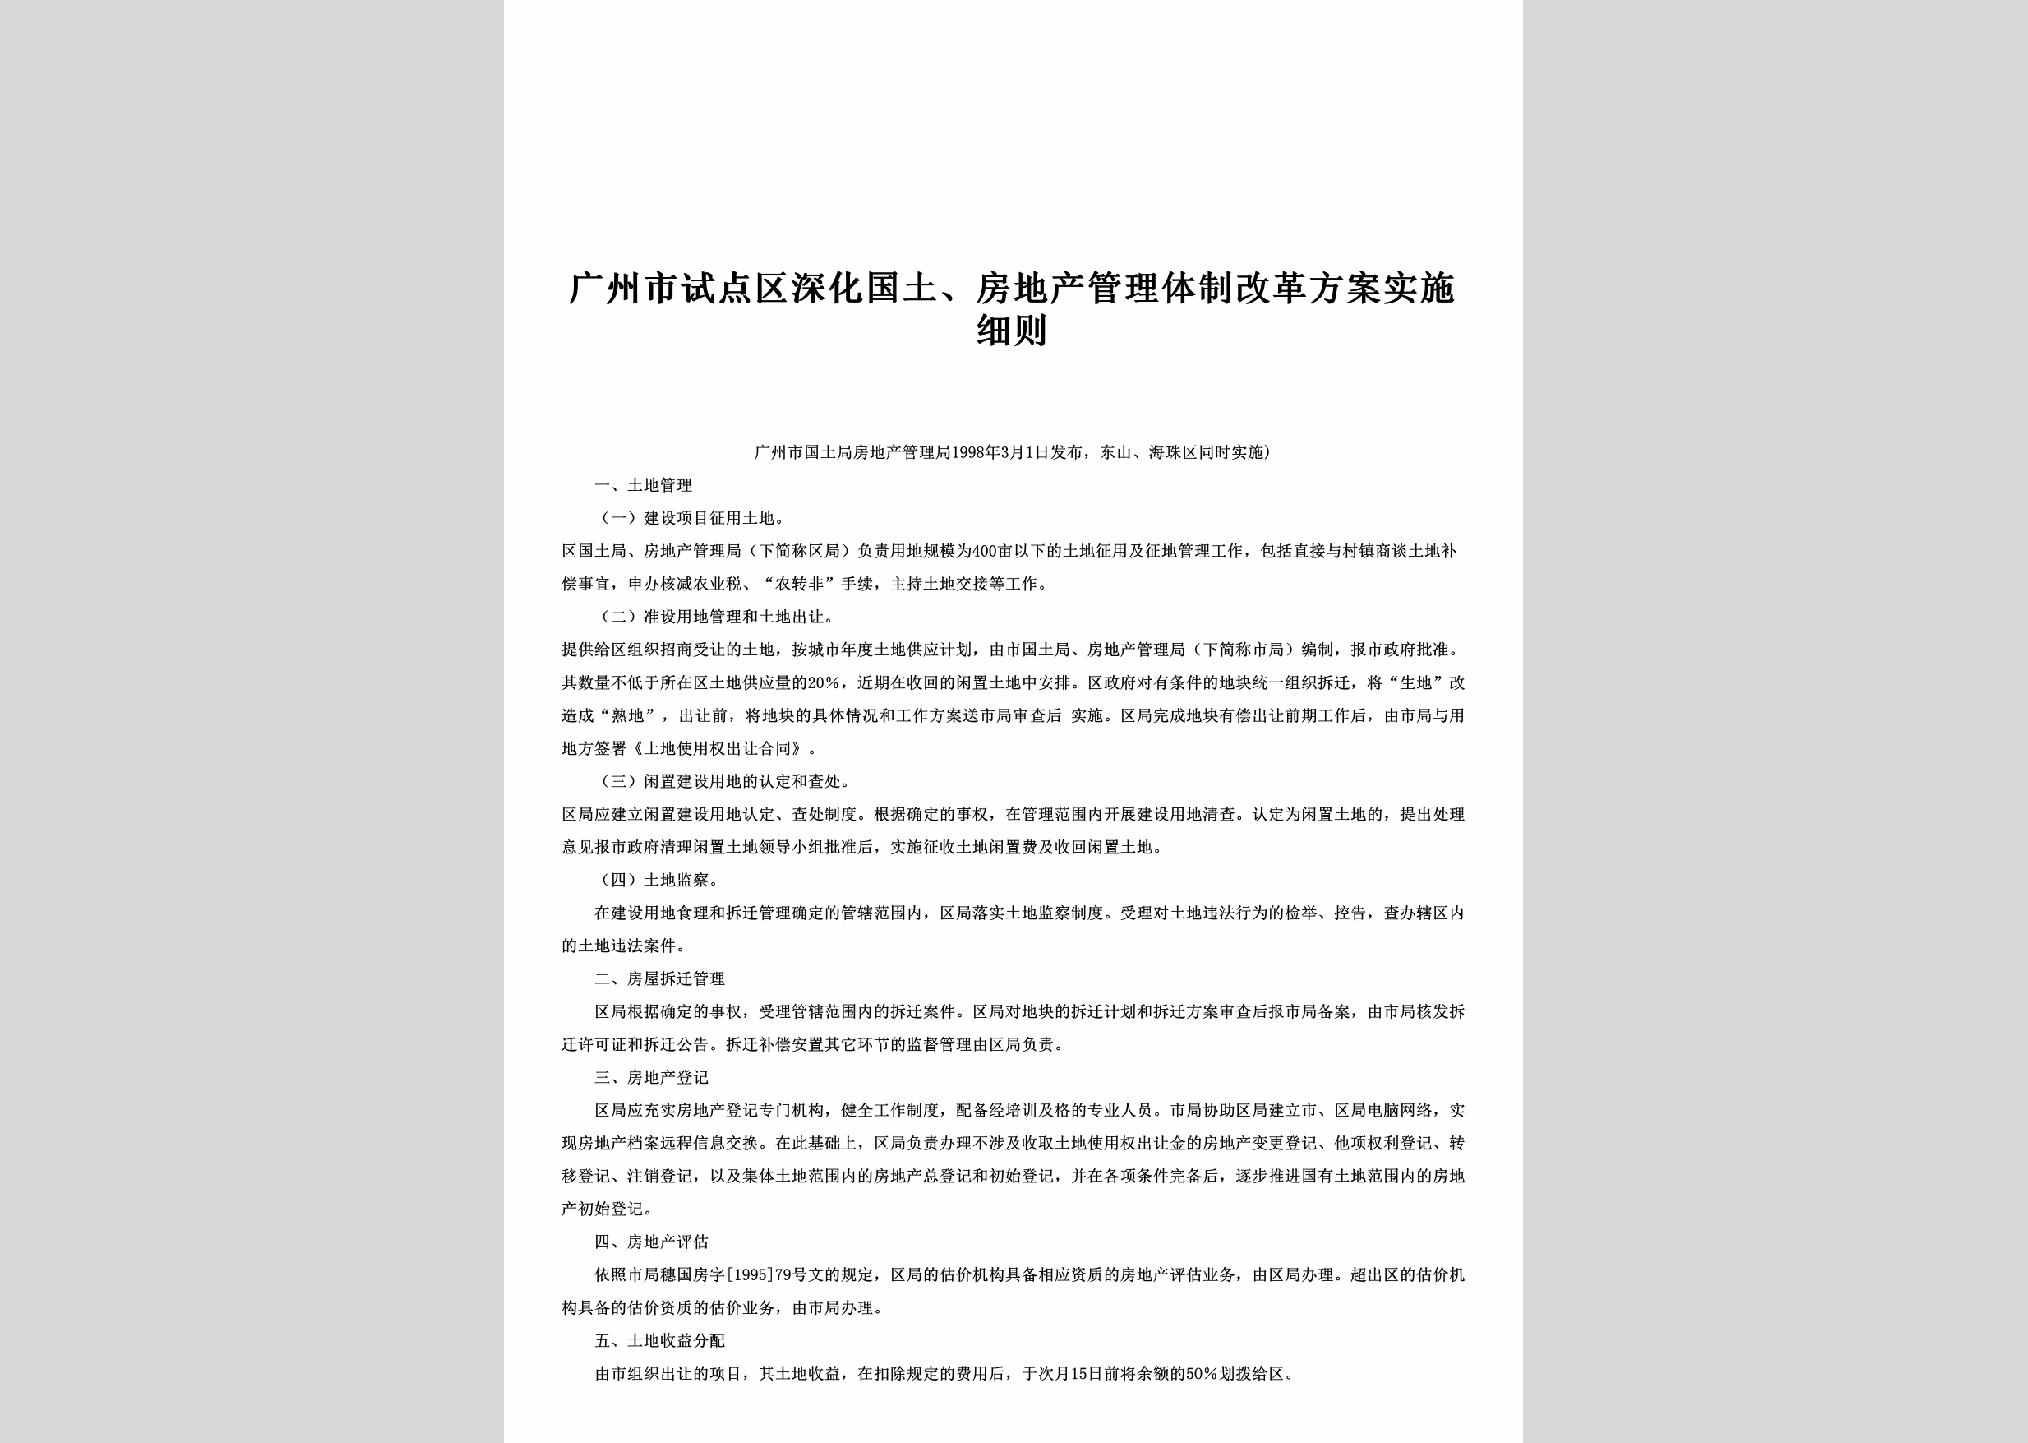 GD-FCGLFAXZ-1998：广州市试点区深化国土、房地产管理体制改革方案实施细则